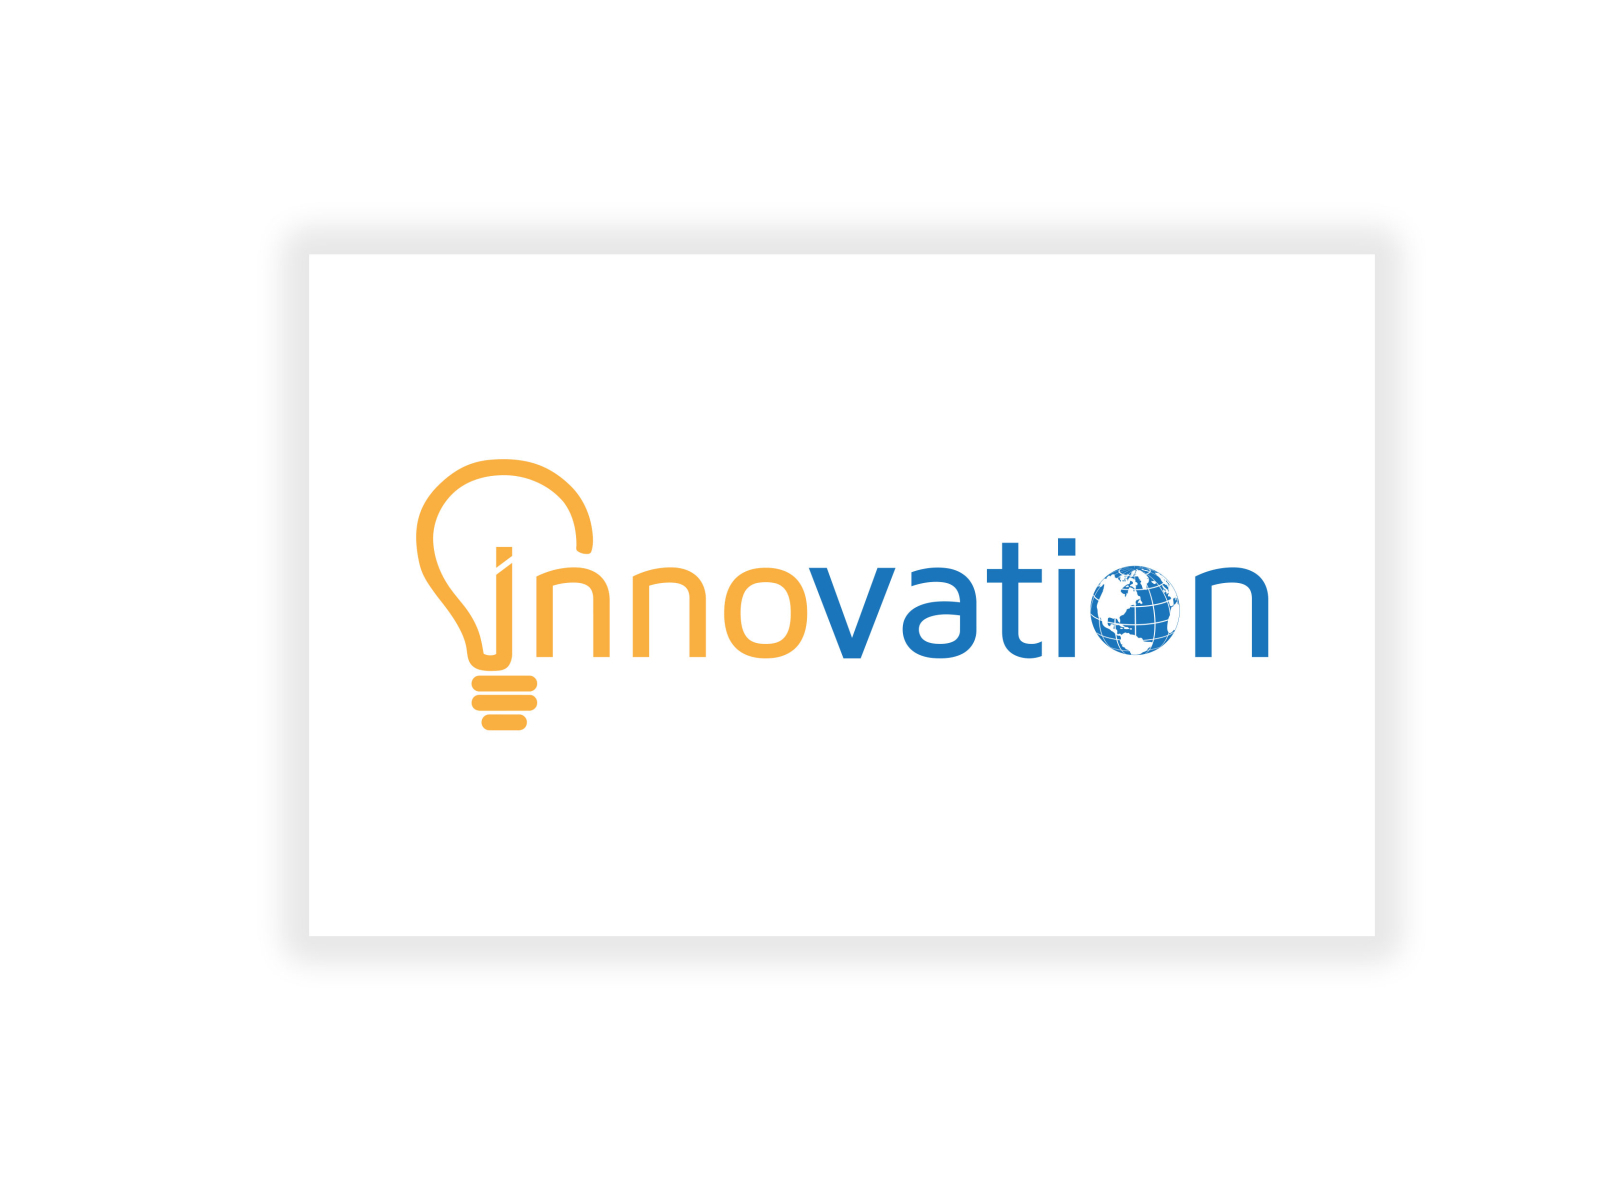 Innovation Logo By Ataur Rahman On Dribbble